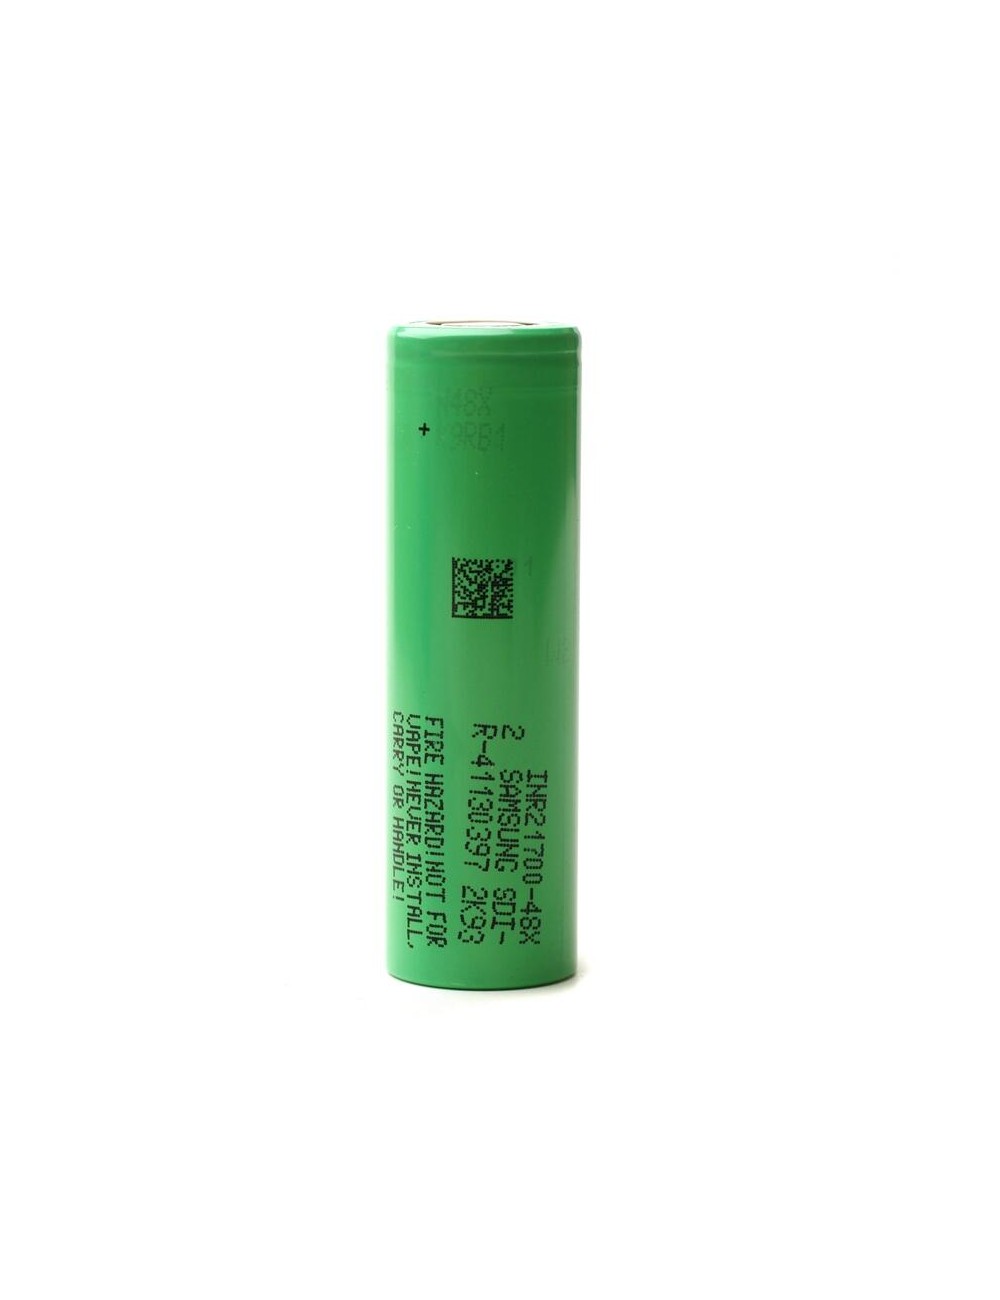 INR21700-48X batería 3,6V 4800mAh 9,6A Litio Ion Samsung SDI - INR21700-48X -  -  - 1